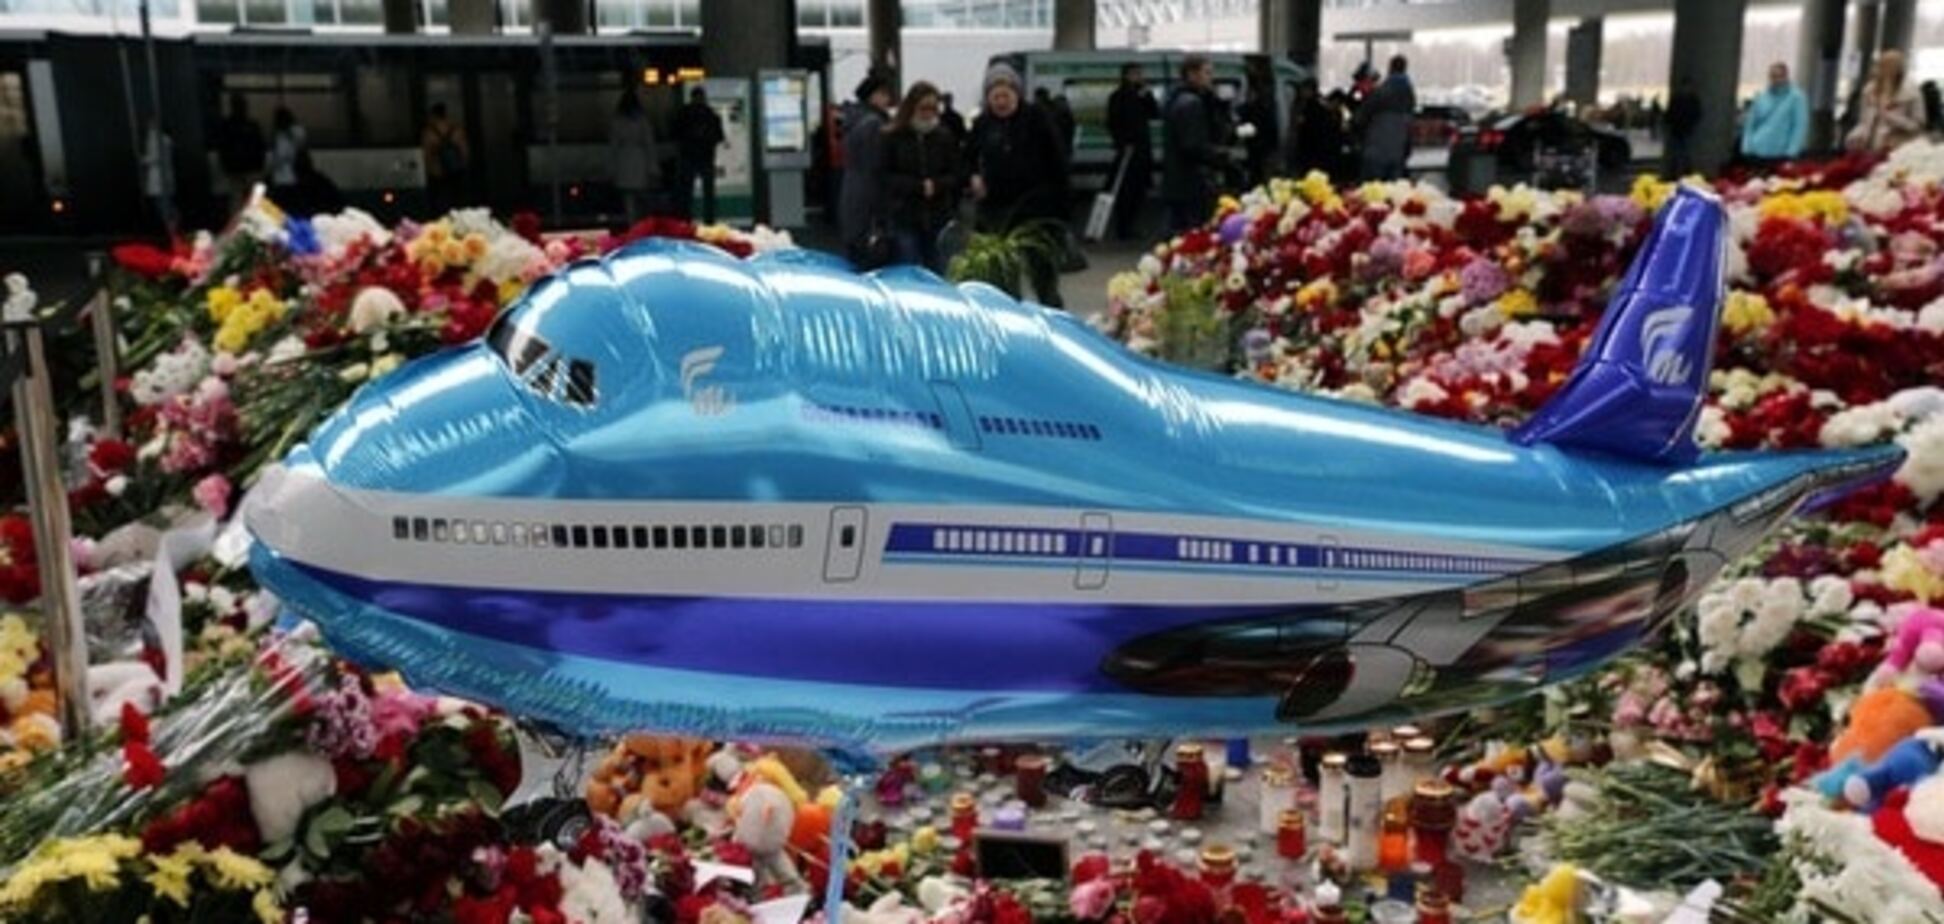 Расплата за теракт: от Египта требуют компенсации за упавший самолет